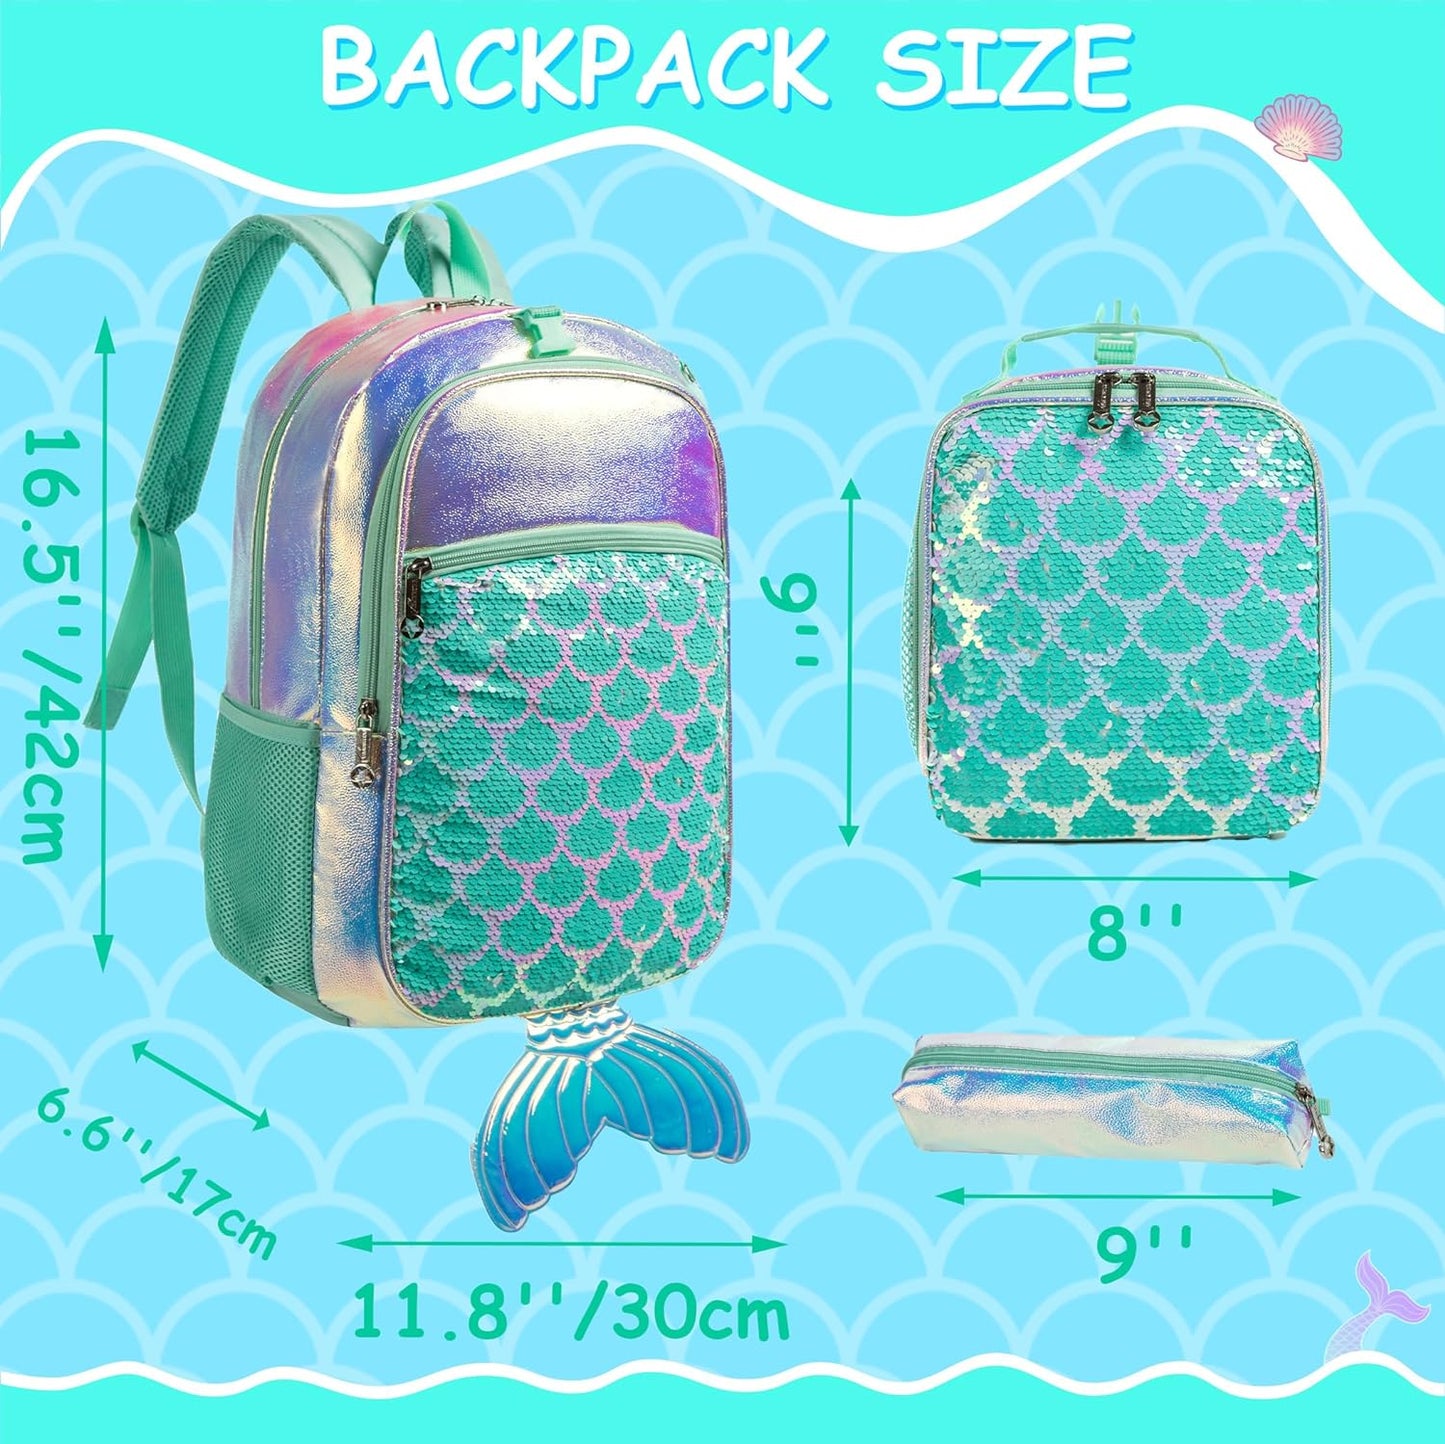 Backpacks for Girls School Bag Cute Girls Backpacks Ages 8-10 with Lunch Box Kids Bookbag Set Travel Backpack for Preschool Kindergarten Elementary Students Backpack to School Supplies